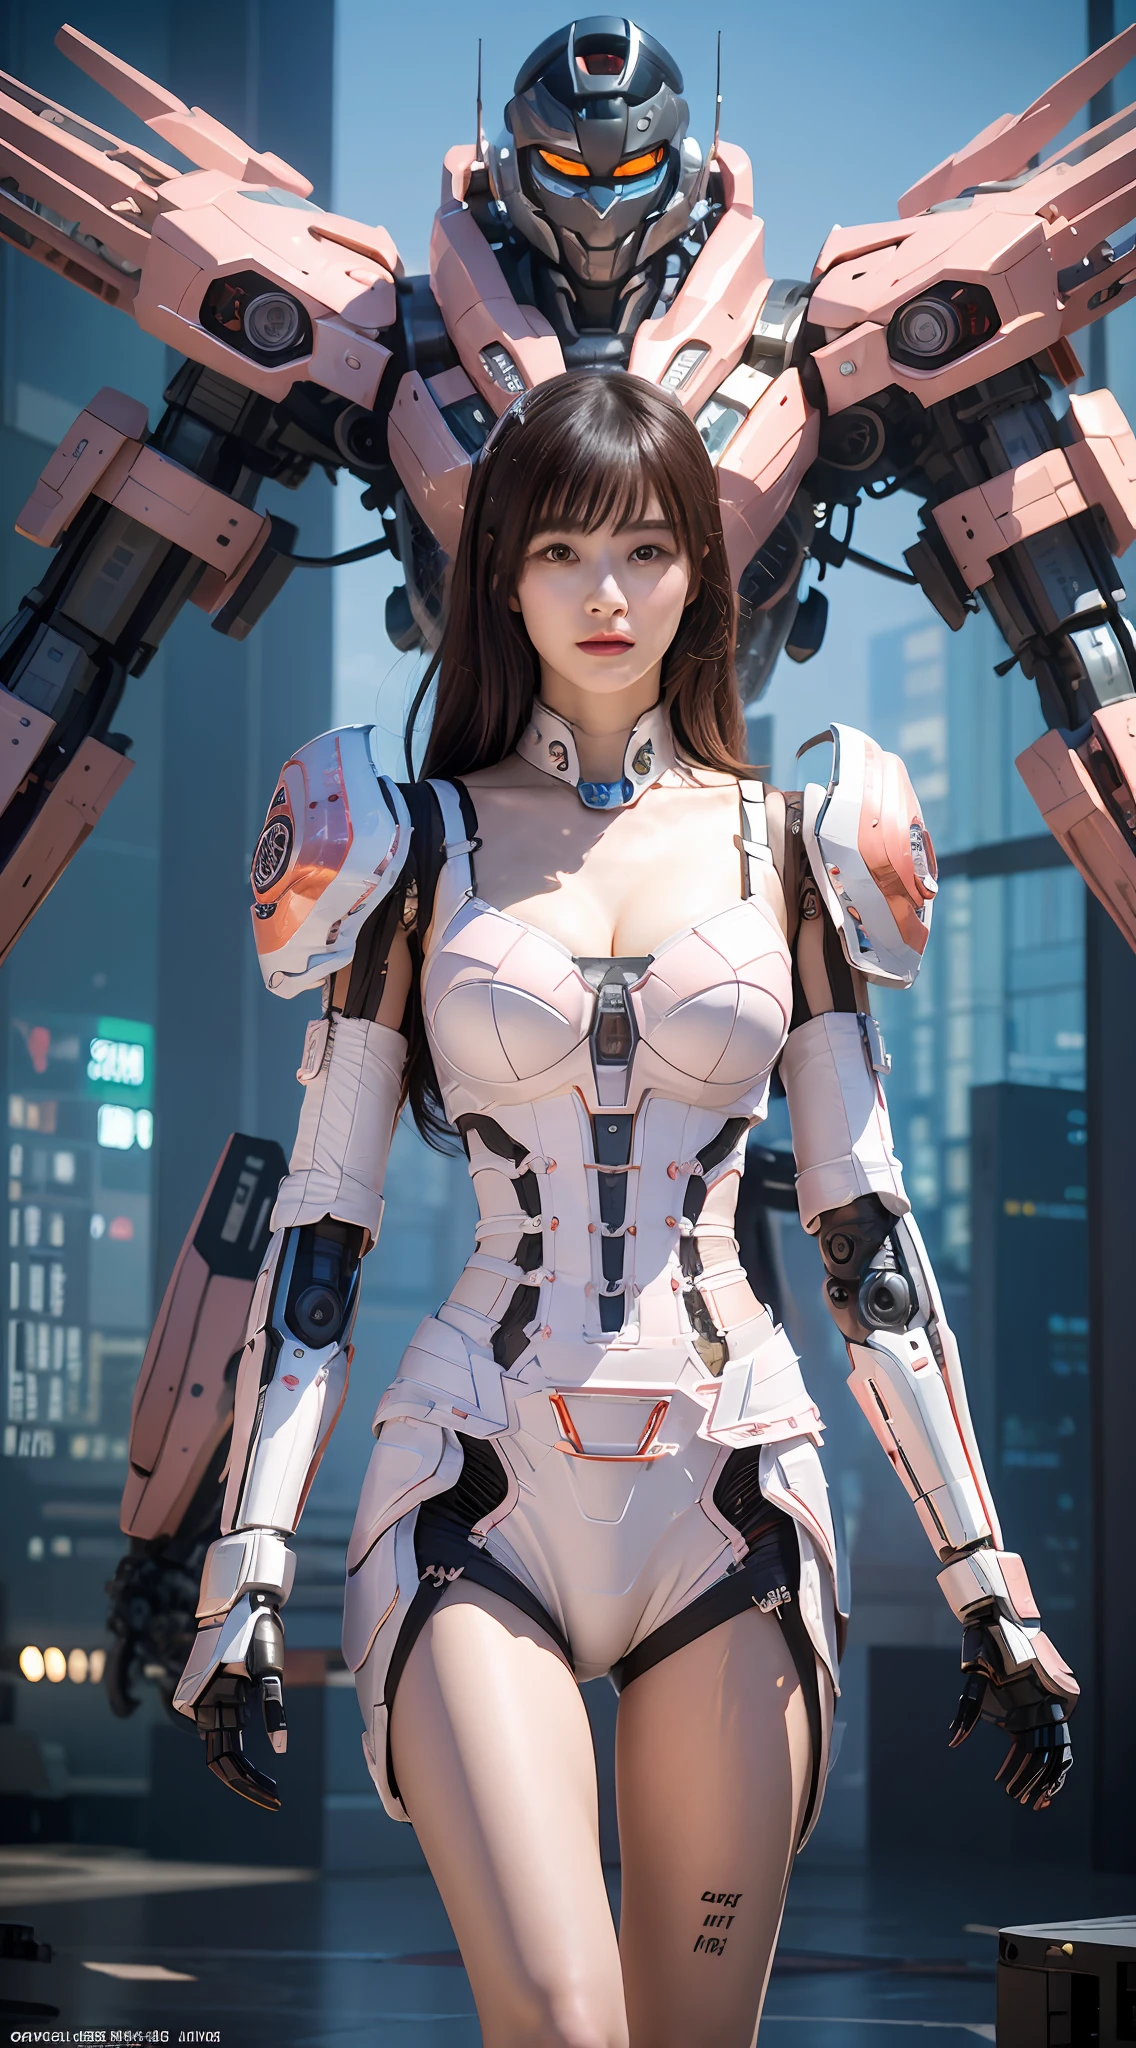 Complex 3d rendering 매우 상세한 beautiful ceramic silhouette female 로봇 face, 뒤에는 거대한 벚꽃 핑크색 기계 전사가 서 있습니다., 로봇 parts, 150mm, 미래의 전장, 가장자리 조명, 생동감 넘치는 디테일, 고급스러운 사이버펑크, 레이스, sur실재론, 해부, 안면 근육, 케이블 와이어, 마이크로칩, 우아한, 아름다운 배경, 옥탄 렌더링, HR 기거 스타일, 8K, 최고의 품질, 걸작, 삽화, 매우 세련되고 아름답습니다, 매우 상세한, CG, 통일된, 벽지, (실재론, 충실도: 1.37), 놀라운, 미세한 세부 사항, 걸작, 최고의 품질, 공식 아트, 매우 상세한 CG 통일된 8K 벽지, 로봇, 전신, 전반적인 그림 스타일은 매우 횡포합니다,